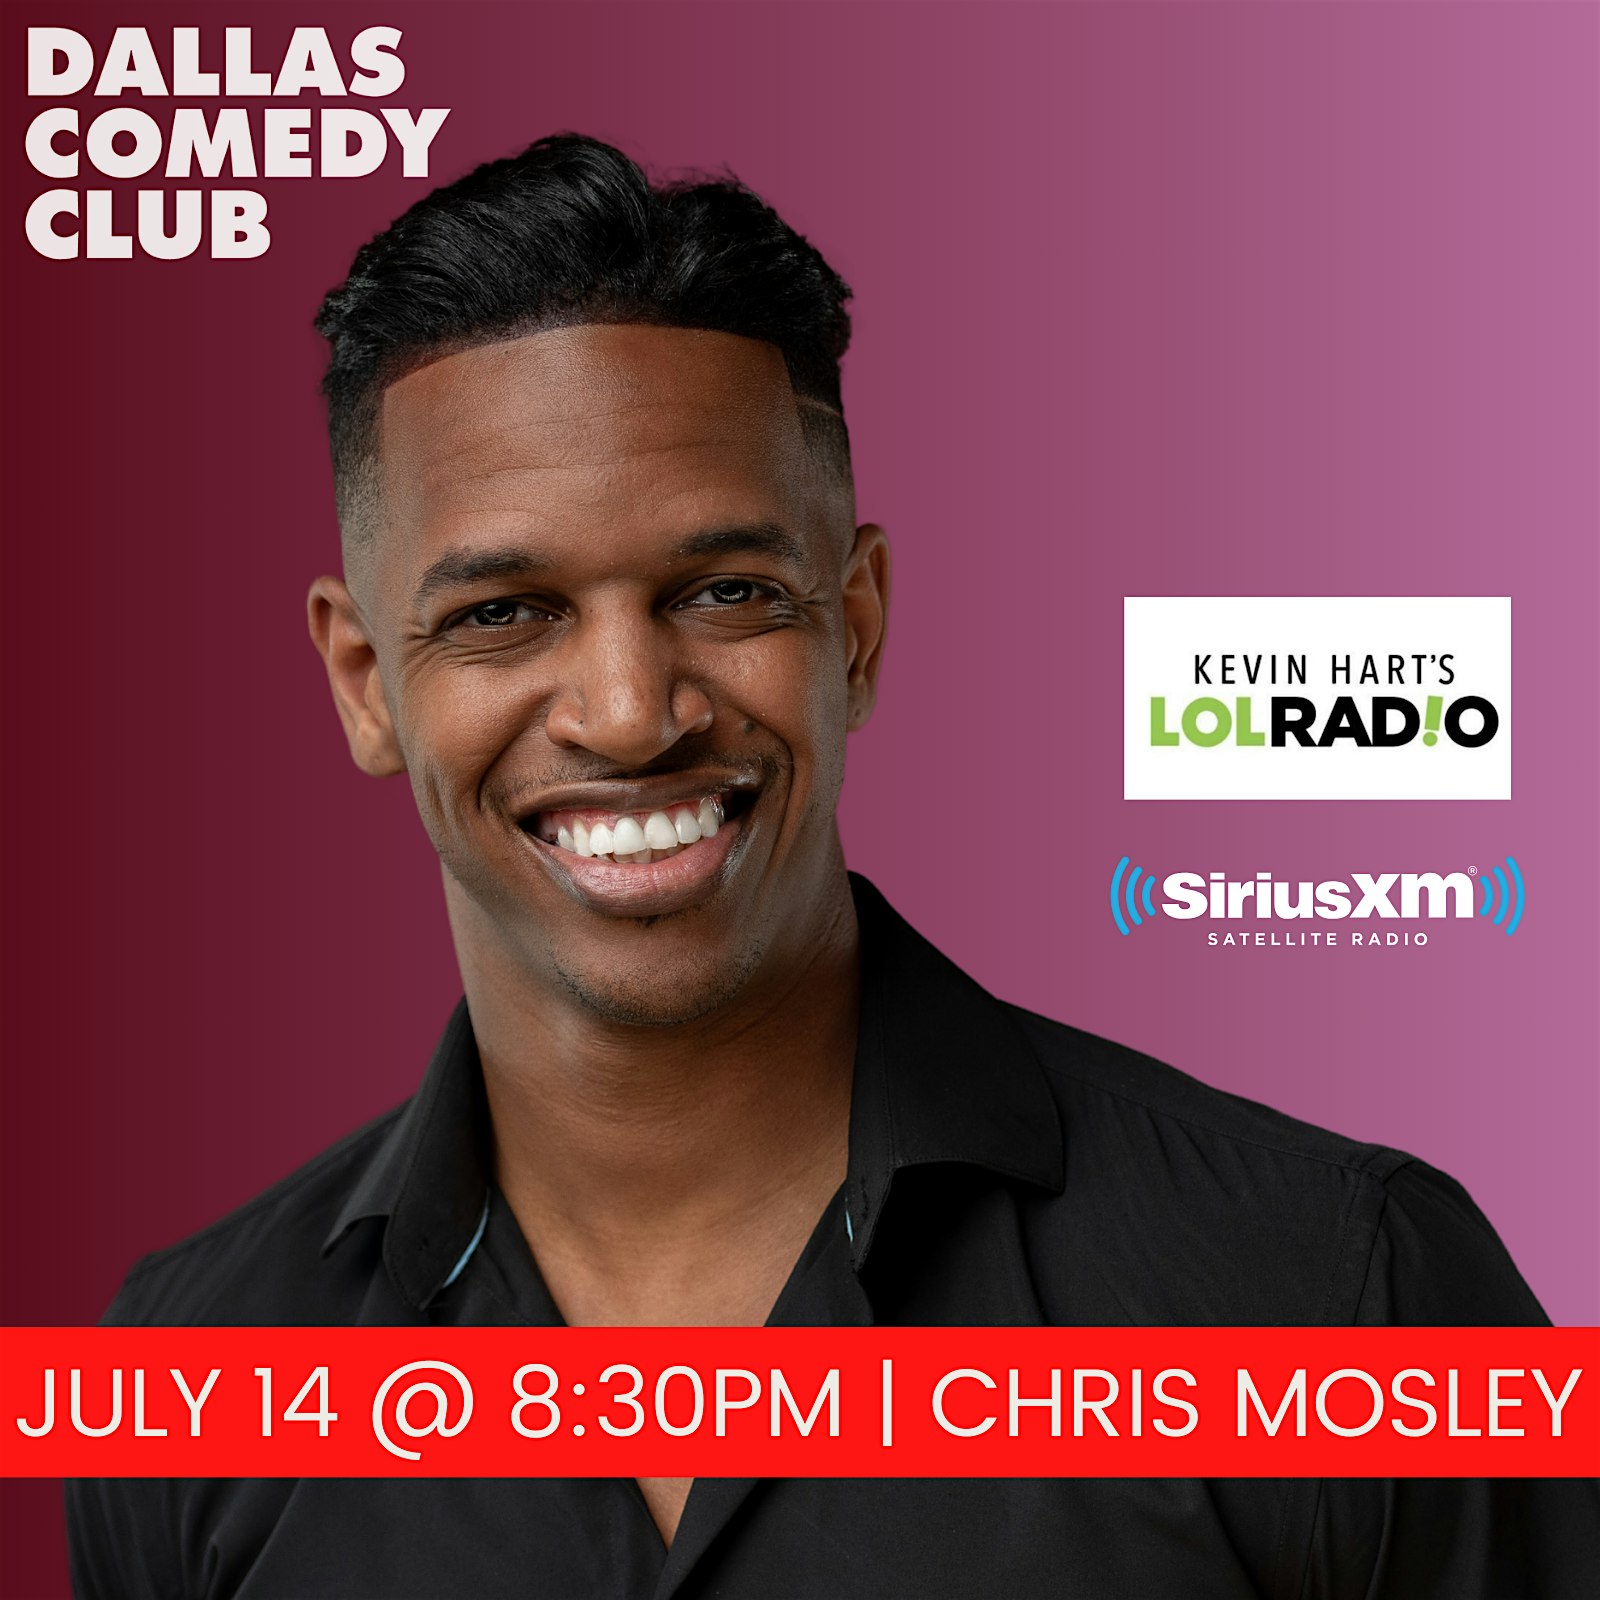 Dallas Comedy Club Presents:CHRIS MOSLEY